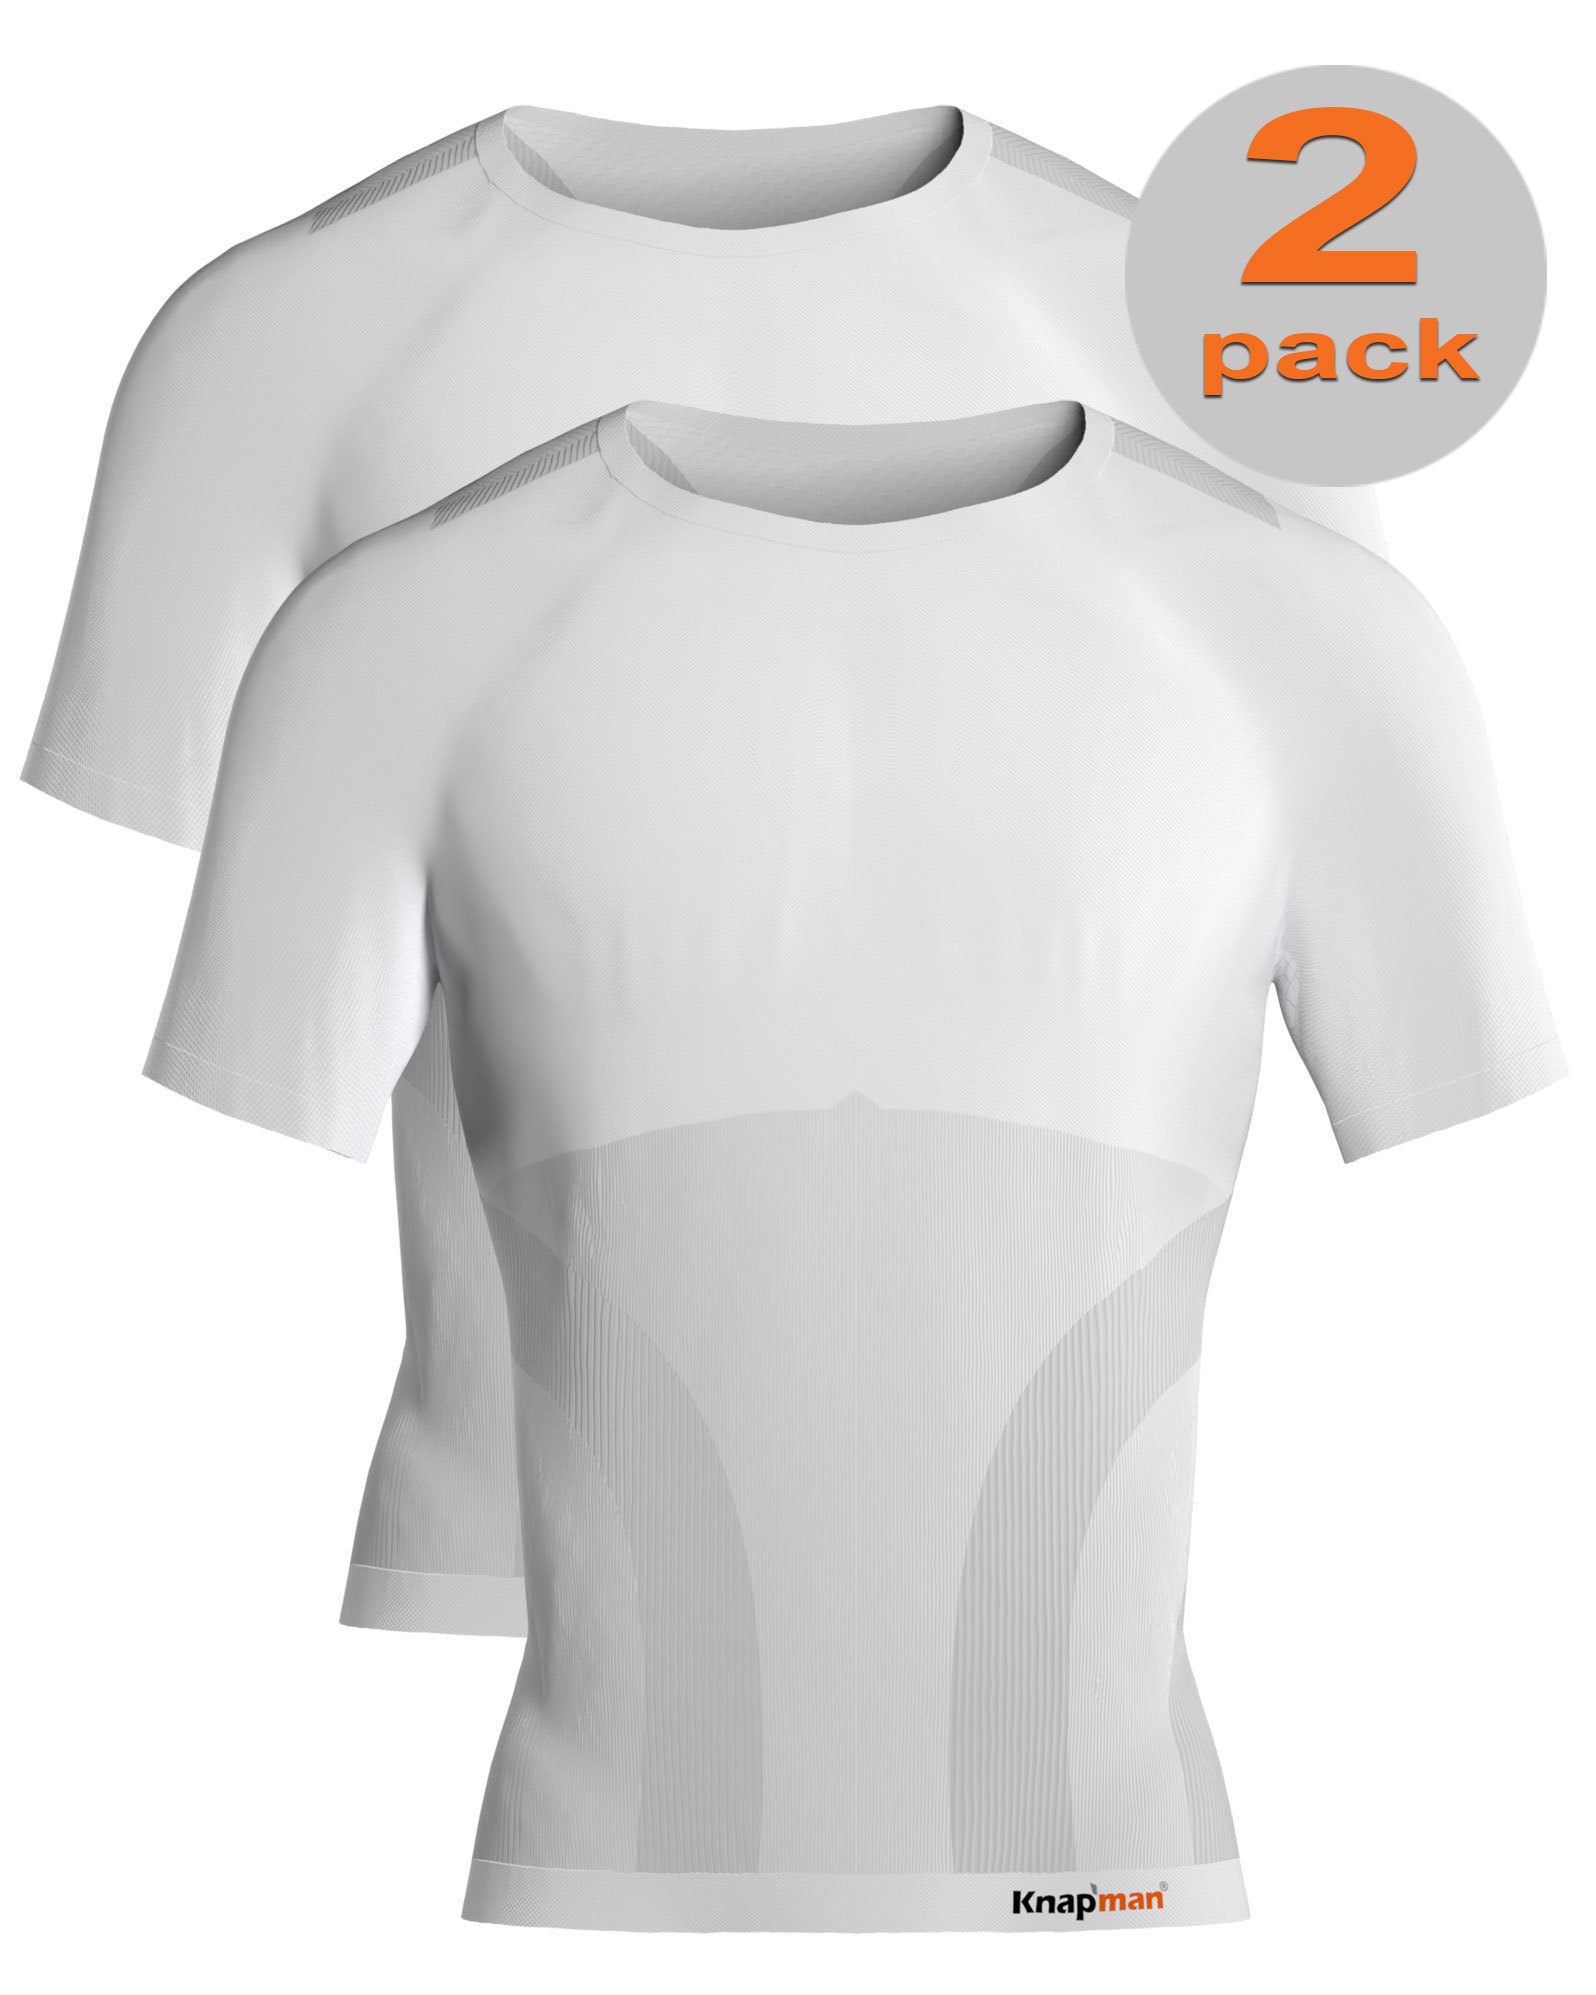 TWOPACK | Knapman Pro Performance Baselayer Shirt Short Sleeve White